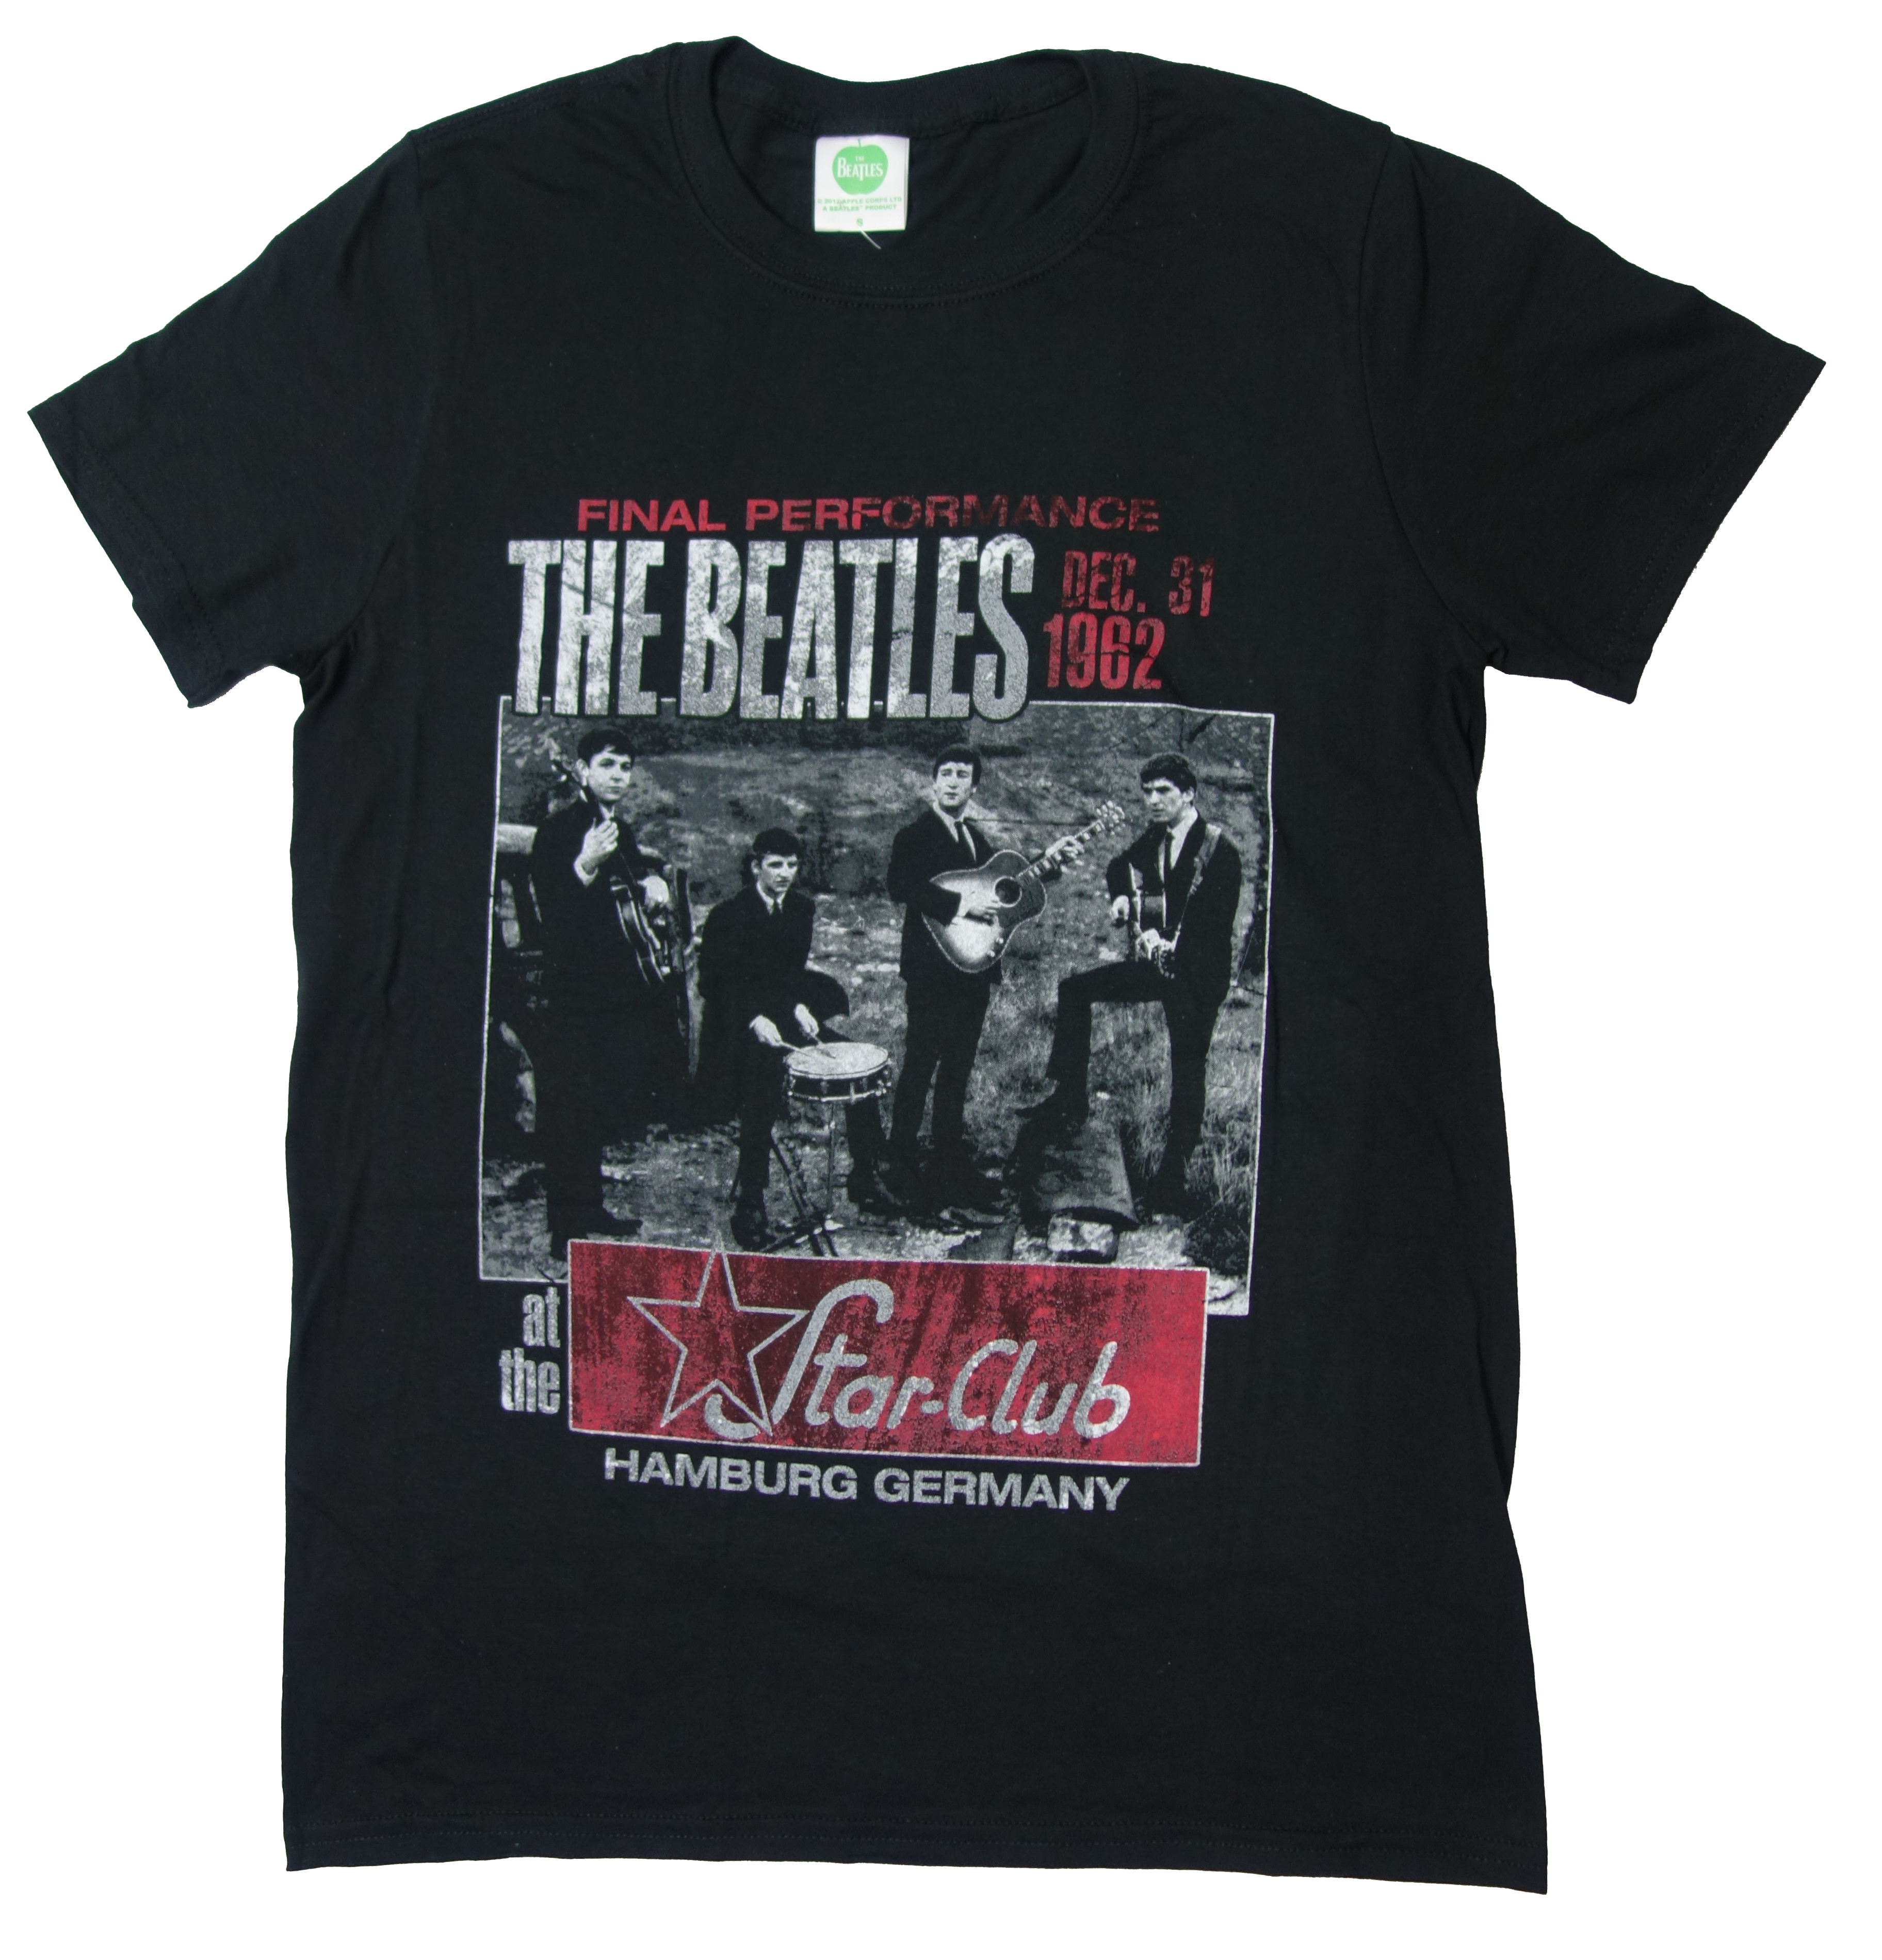 T-Shirts The Beatles Star Club Hamburg